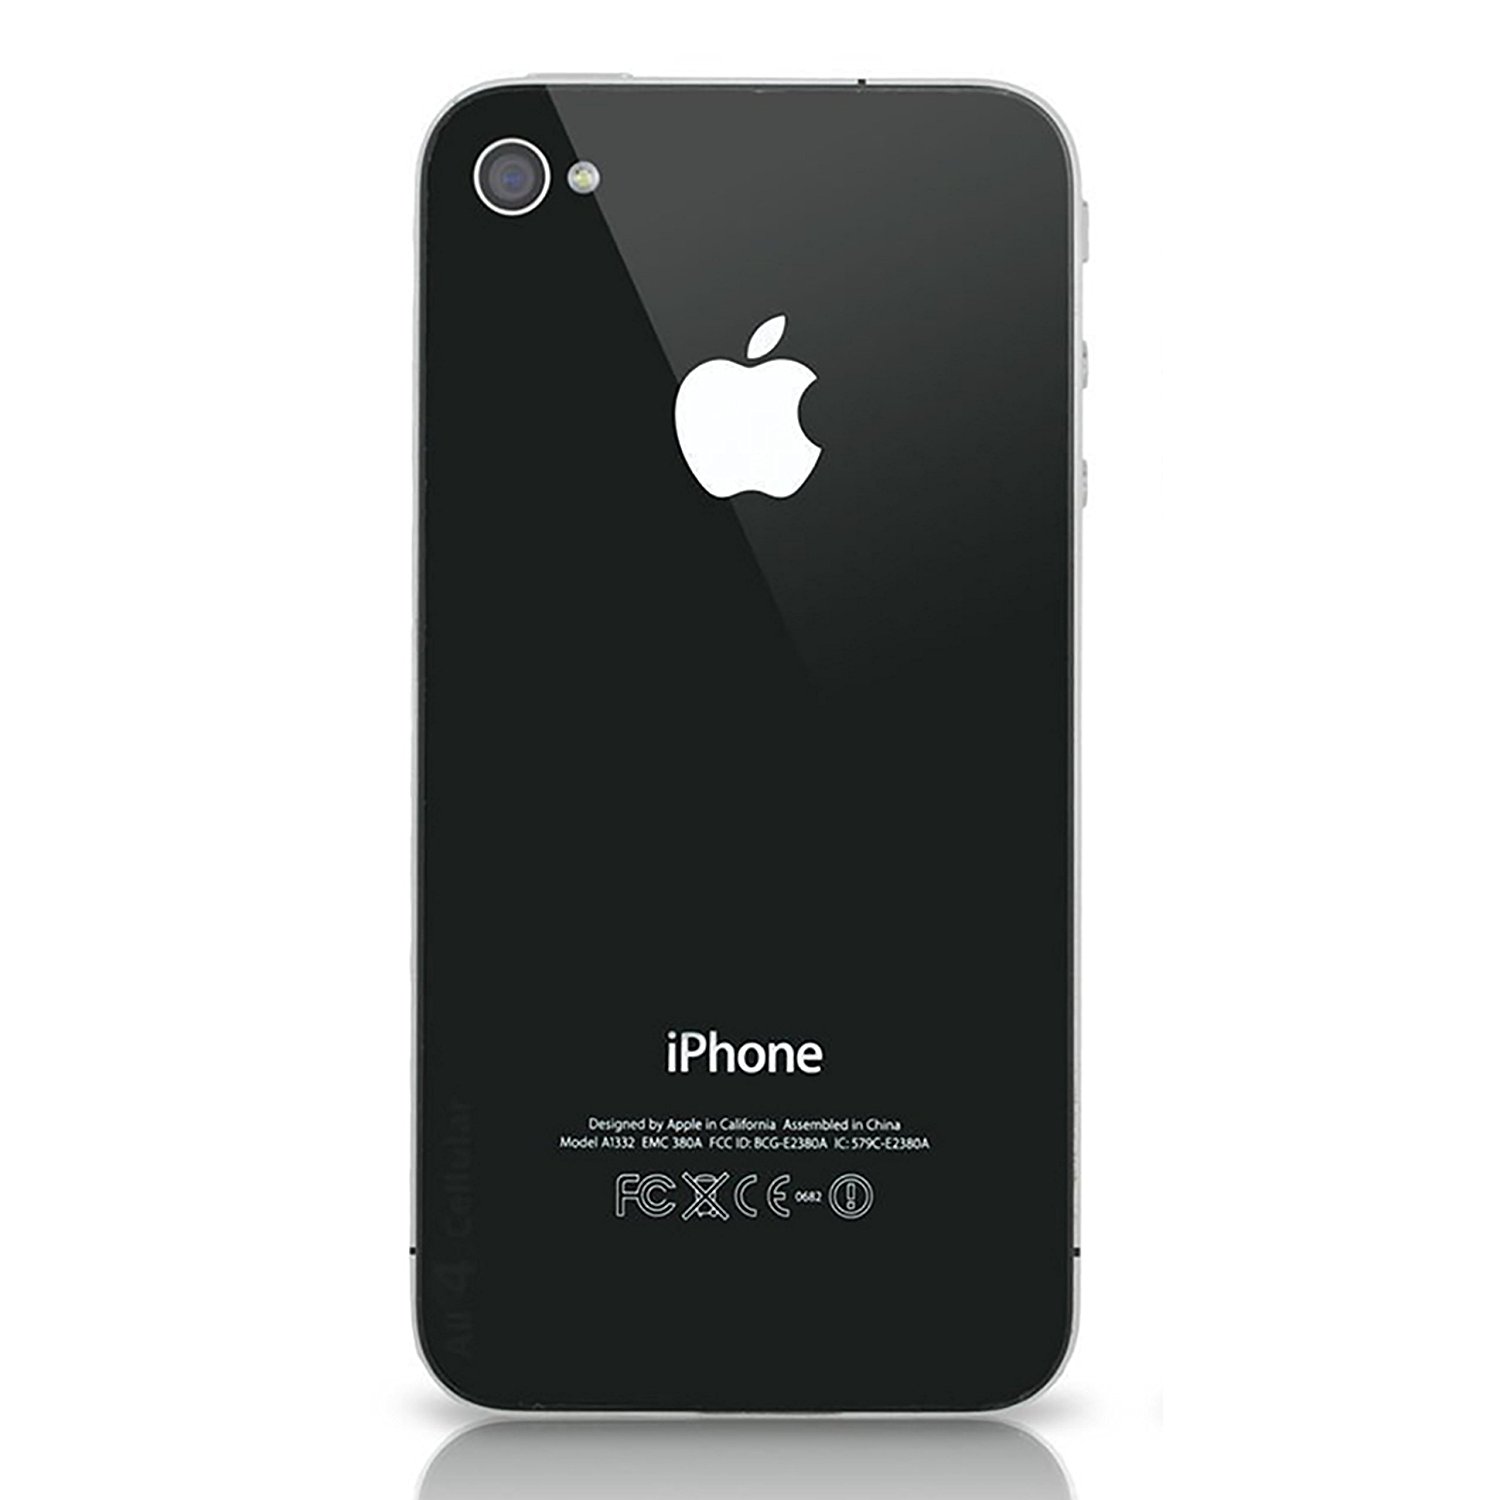 Amazon.com: Apple iPhone 4 16GB (A1332) - GSM Factory Unlocked - No ...